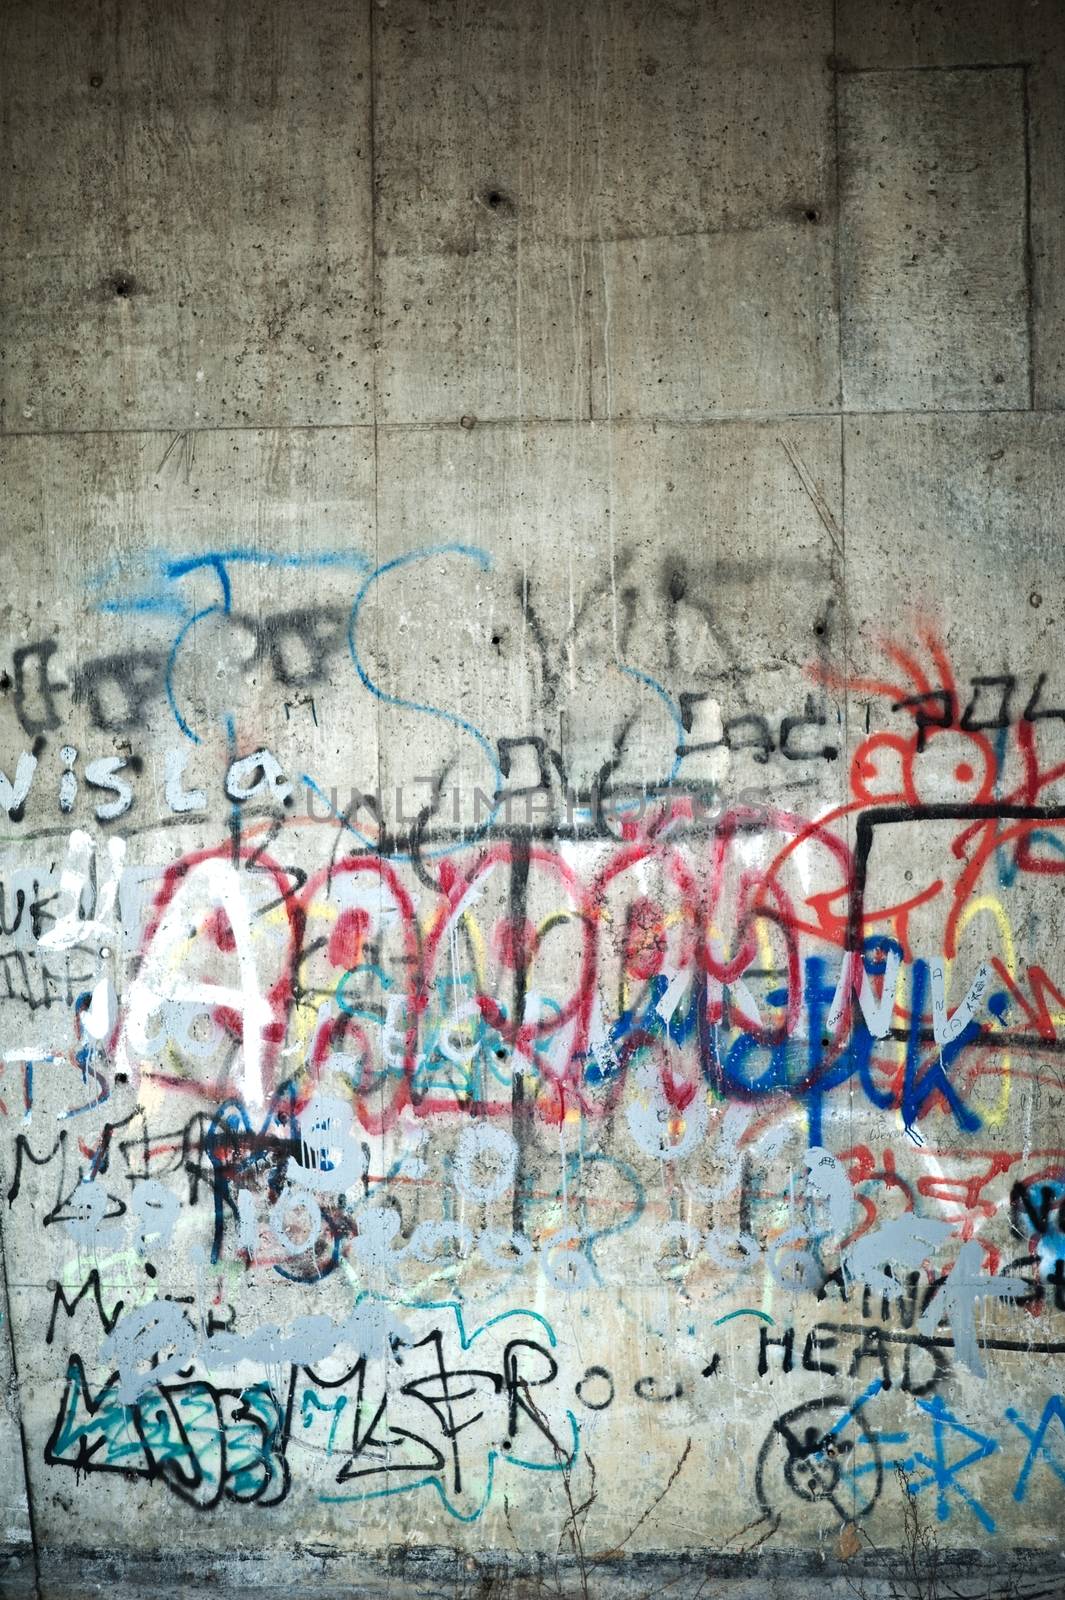 Graffiti Wall Background. Dirty Damaged by Graffiti Building Wall. Vertical Photo.